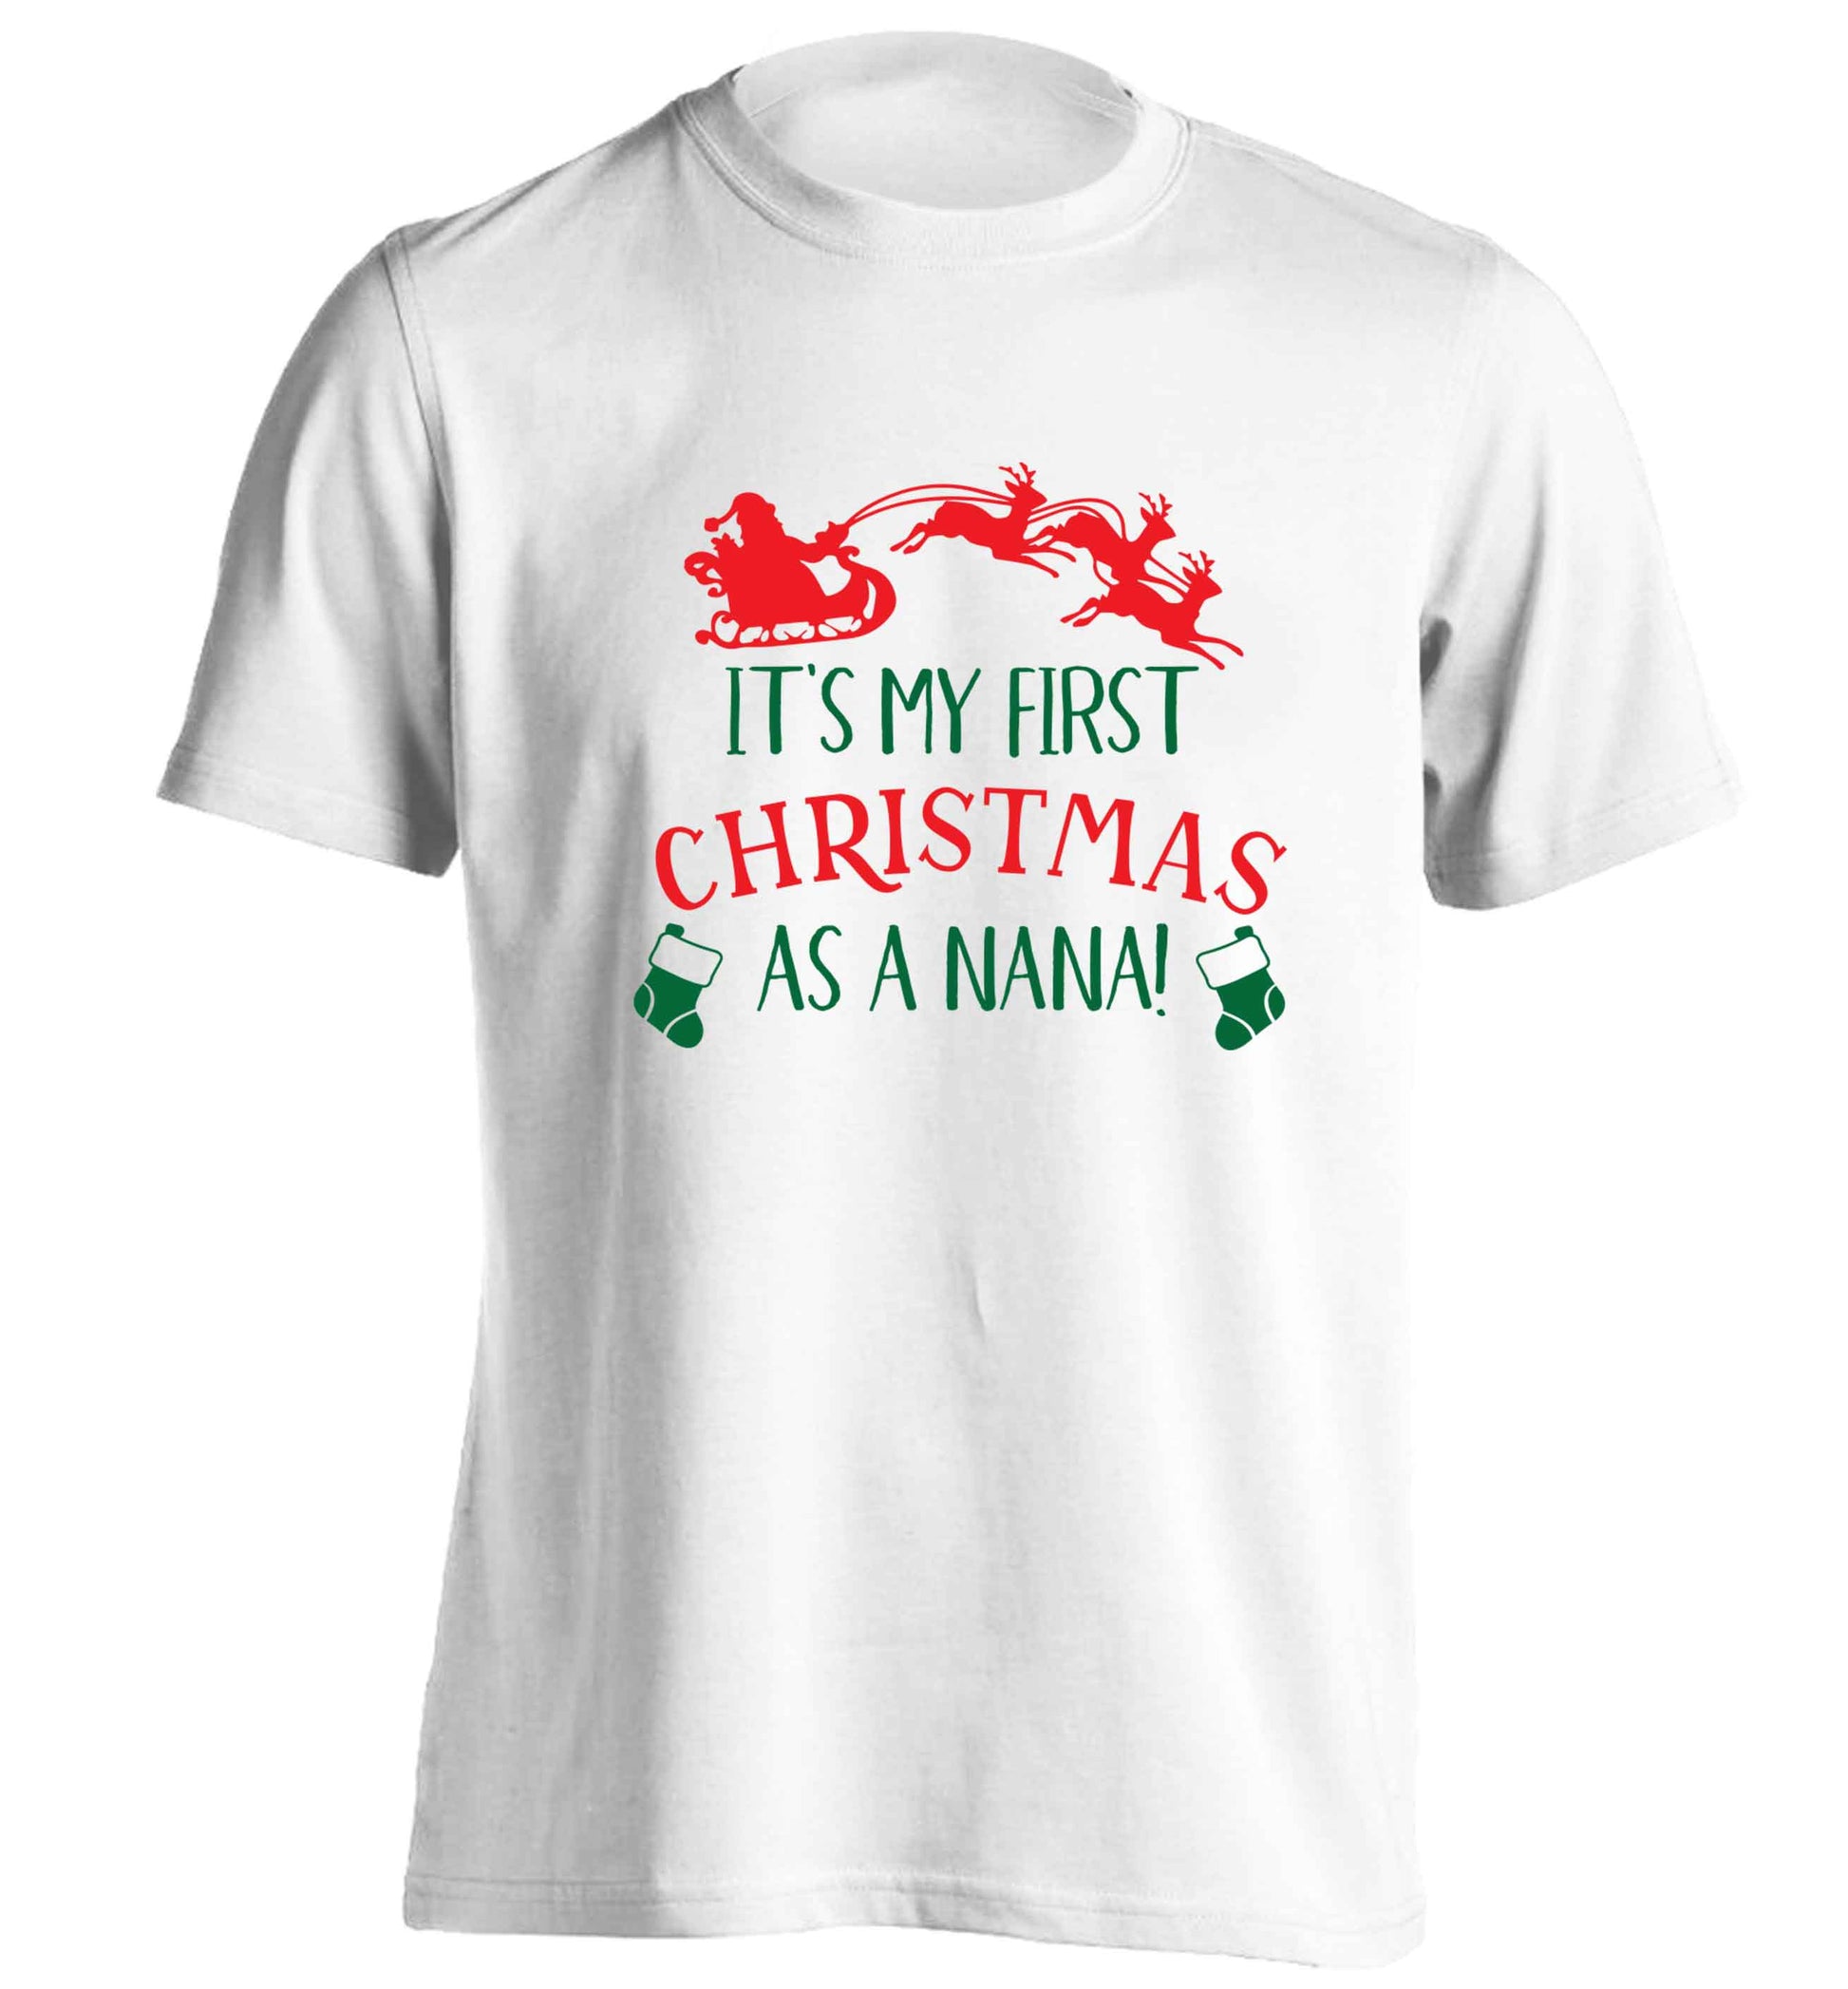 It's my first Christmas as a nana adults unisex white Tshirt 2XL